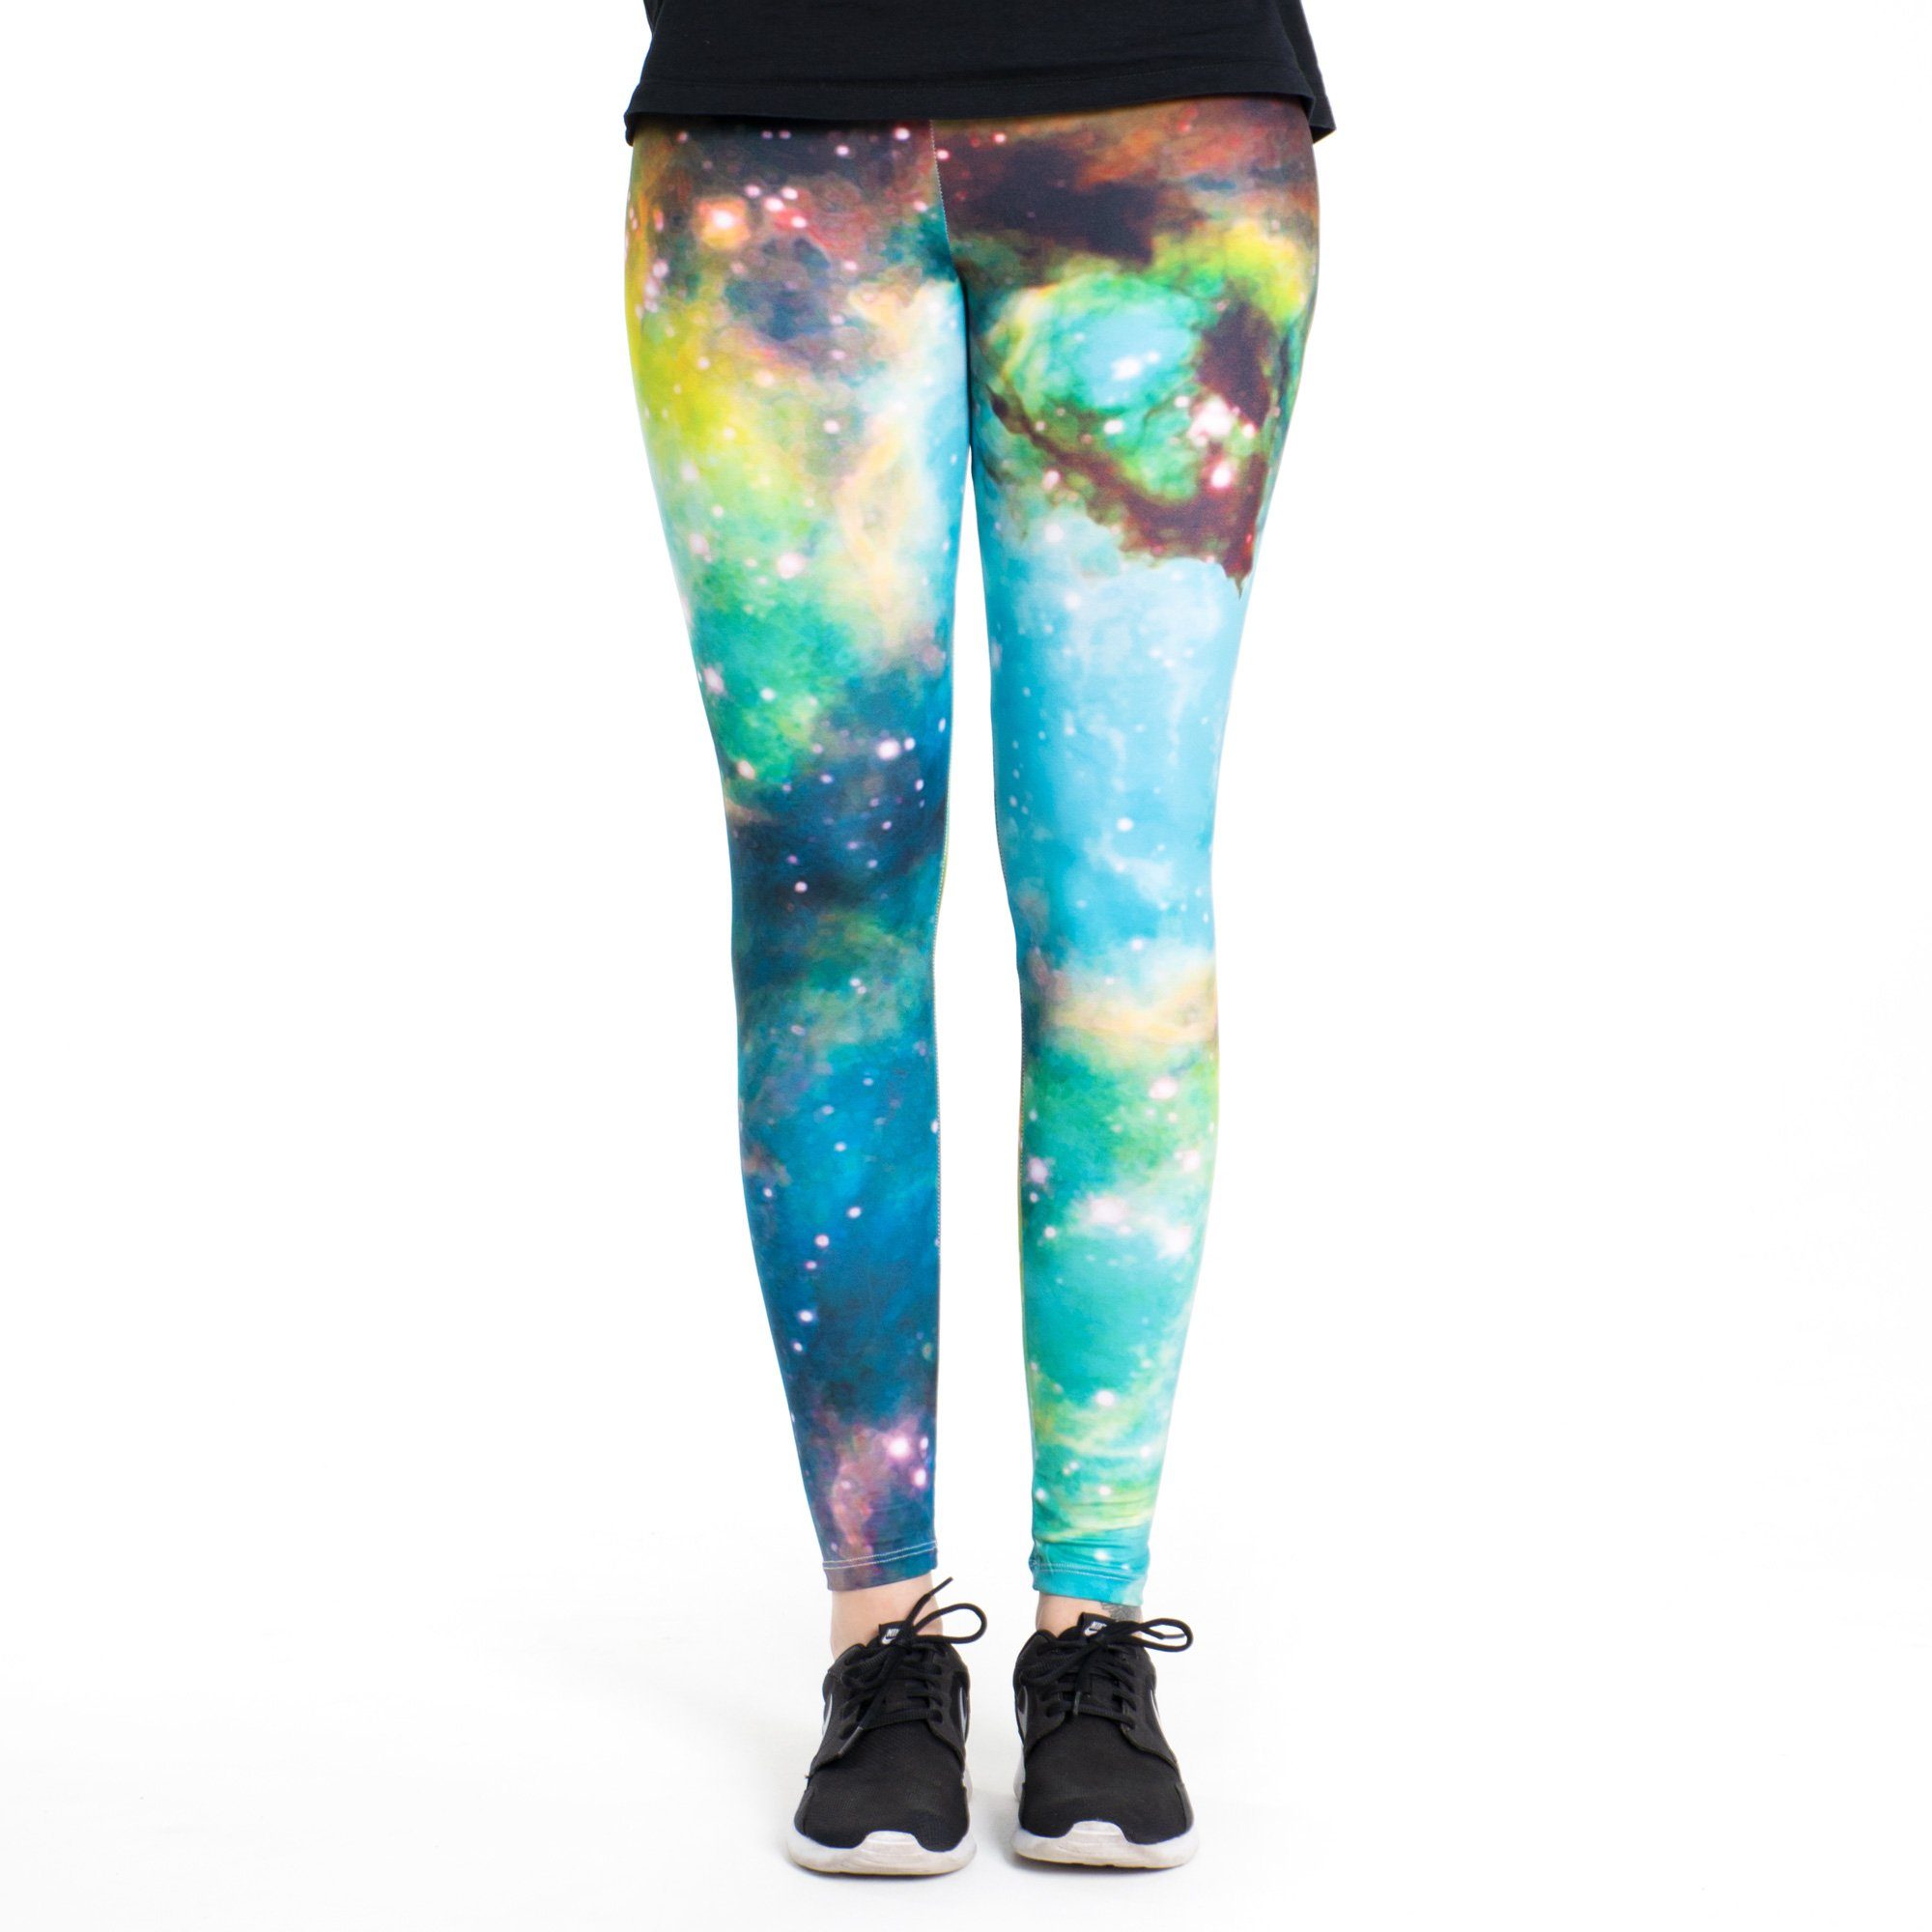 cosey Leggings Festival Leggings/Tights (Einheitsgröße XS-L) Space Nebula